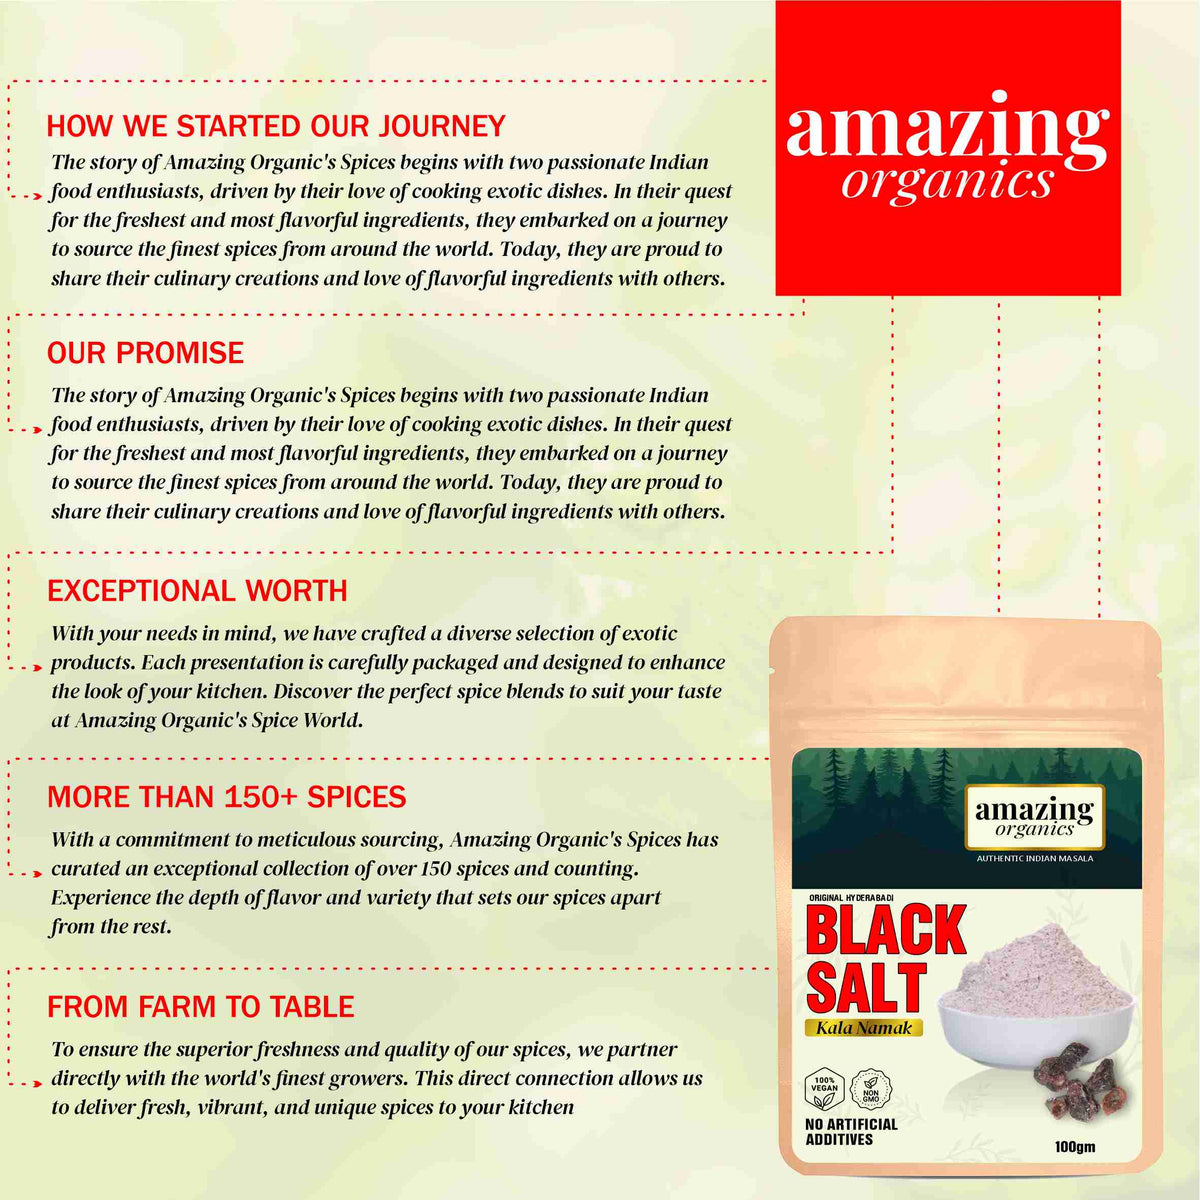 Black Salt Powder (Kala Namak) 3.5ox(100g)  Unrefined, Pure and Natural | Vegan | Gluten Friendly